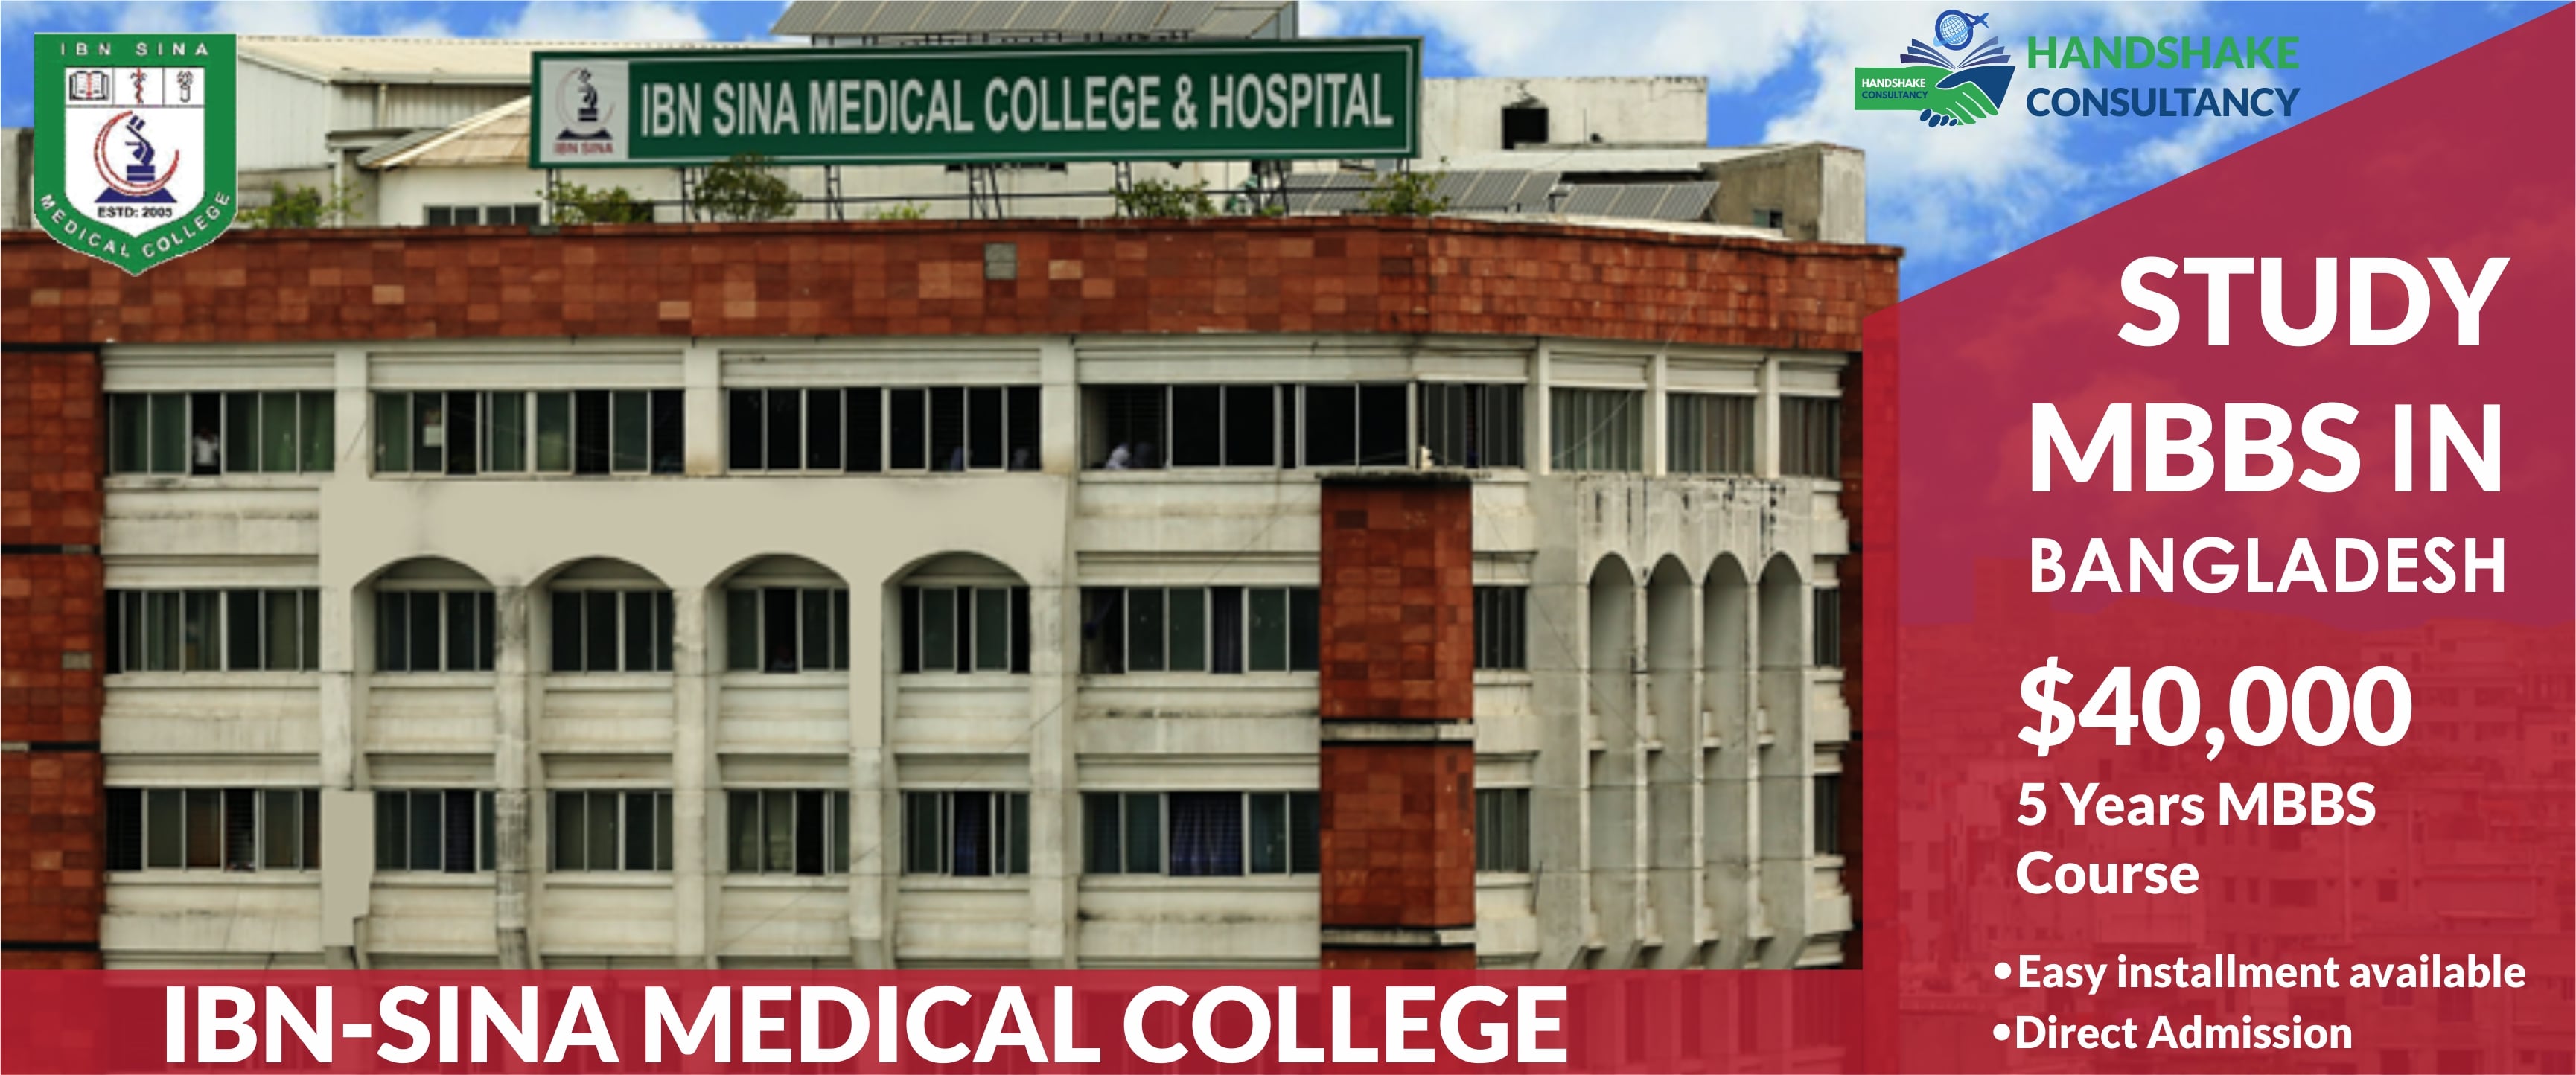 Ibn sina medical college